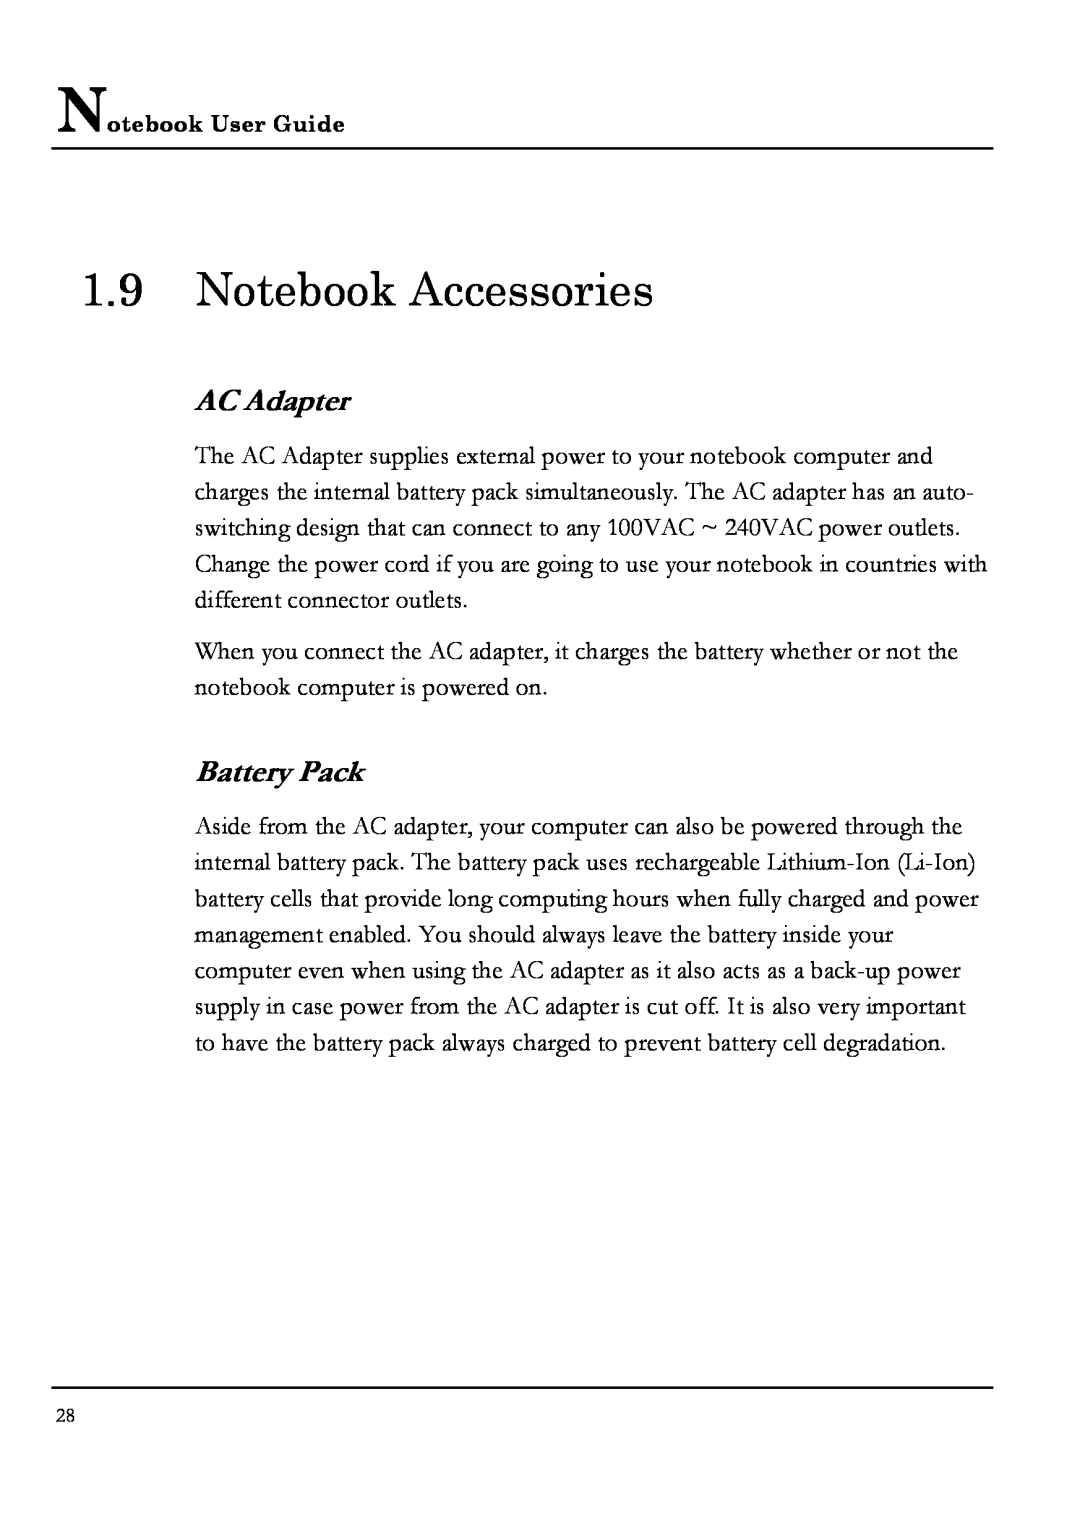 Everex NM4100W, NM3700W, NM3500W, NM3900W manual Notebook Accessories, AC Adapter, Battery Pack 